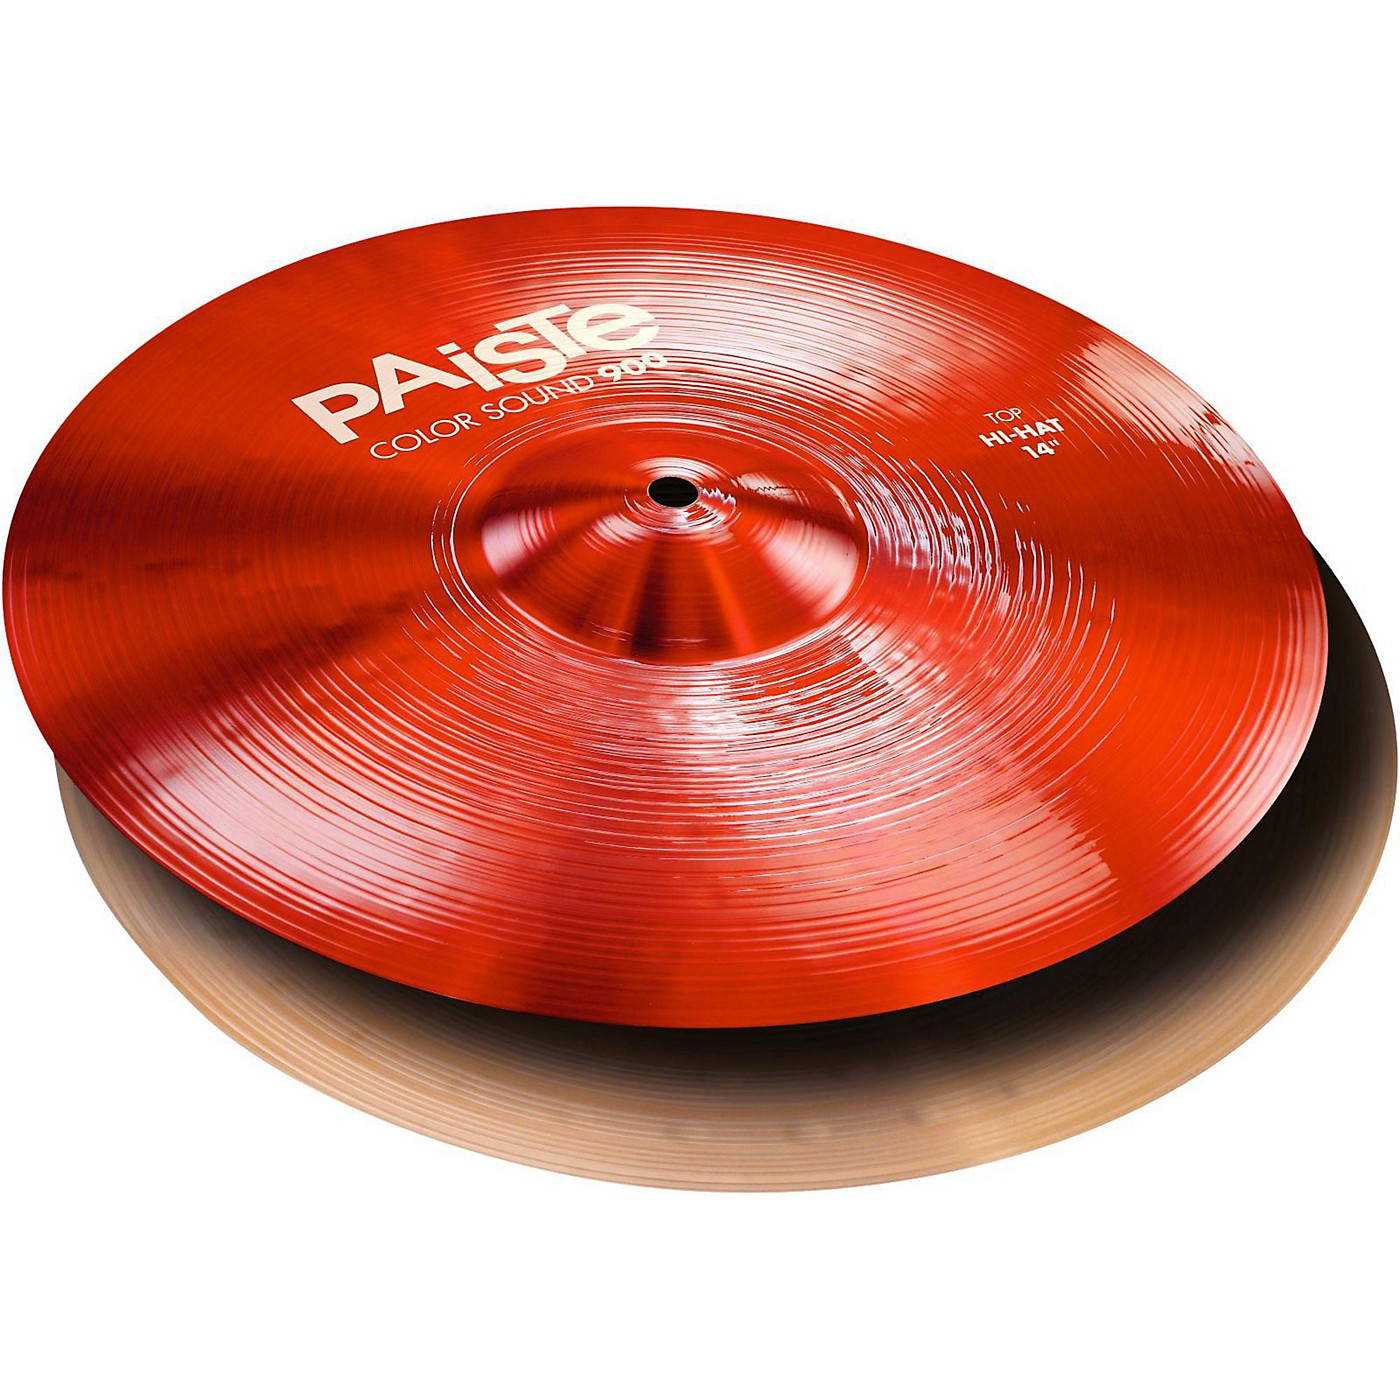 Paiste Colorsound 900 Hi Hat Cymbal Red thumbnail